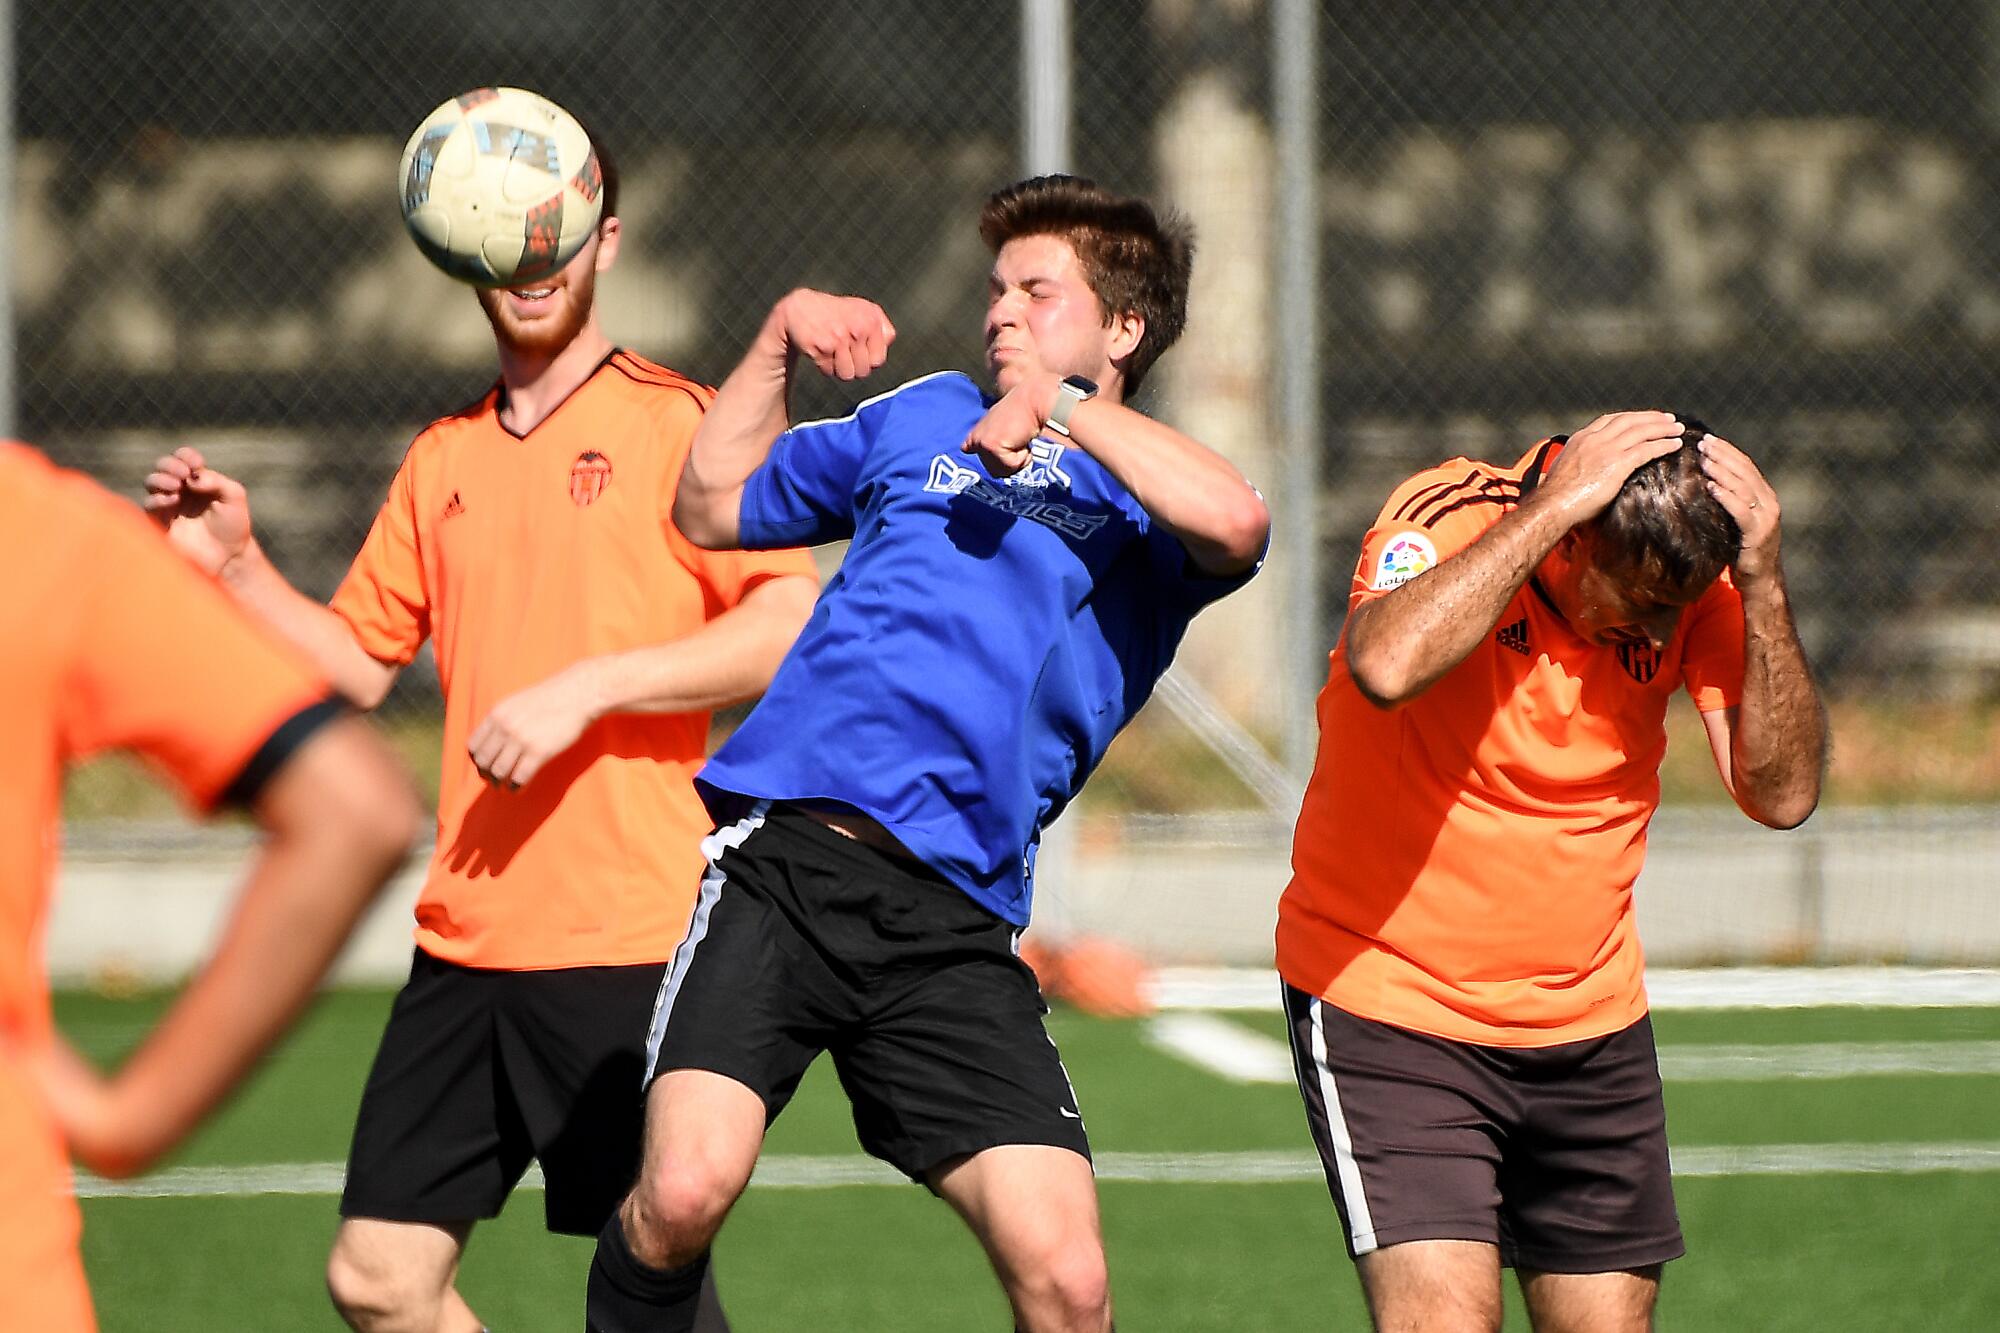 Robert Gray, center, battles for the ball during a Nerd Soccer League game at Caltech in Pasadena.